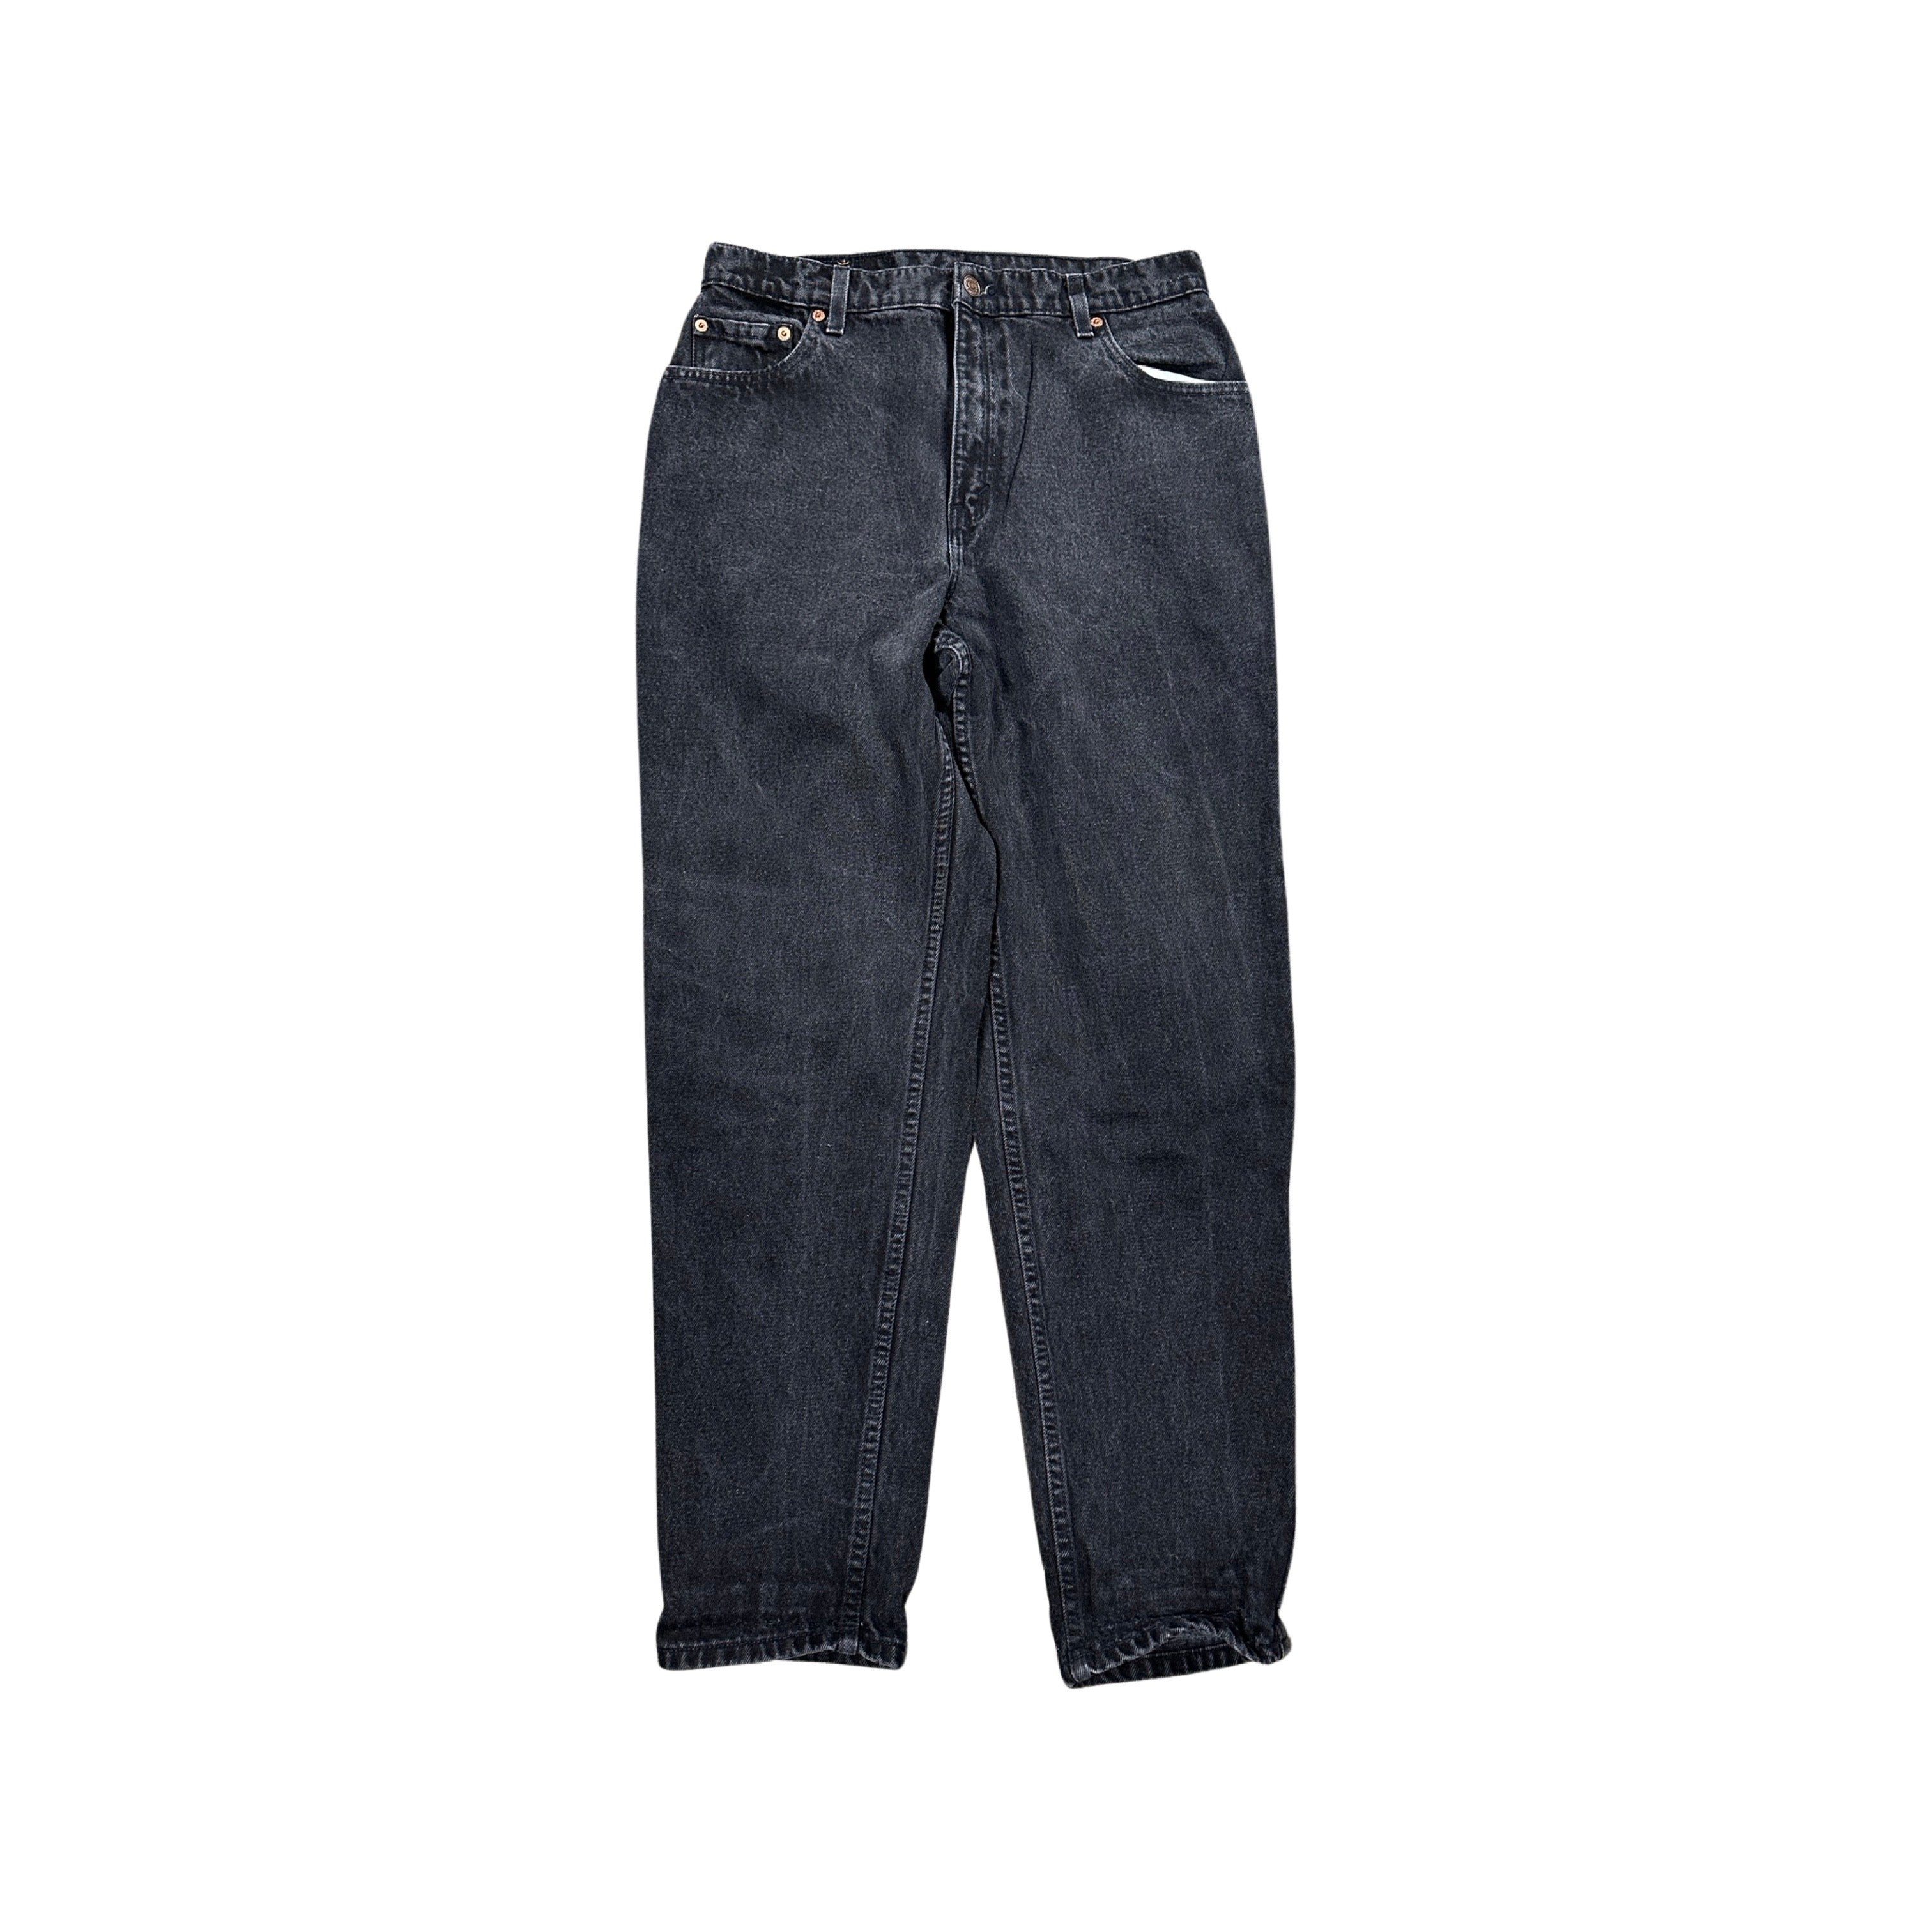 Black Levi’s 551 Jeans 1996 (30”)